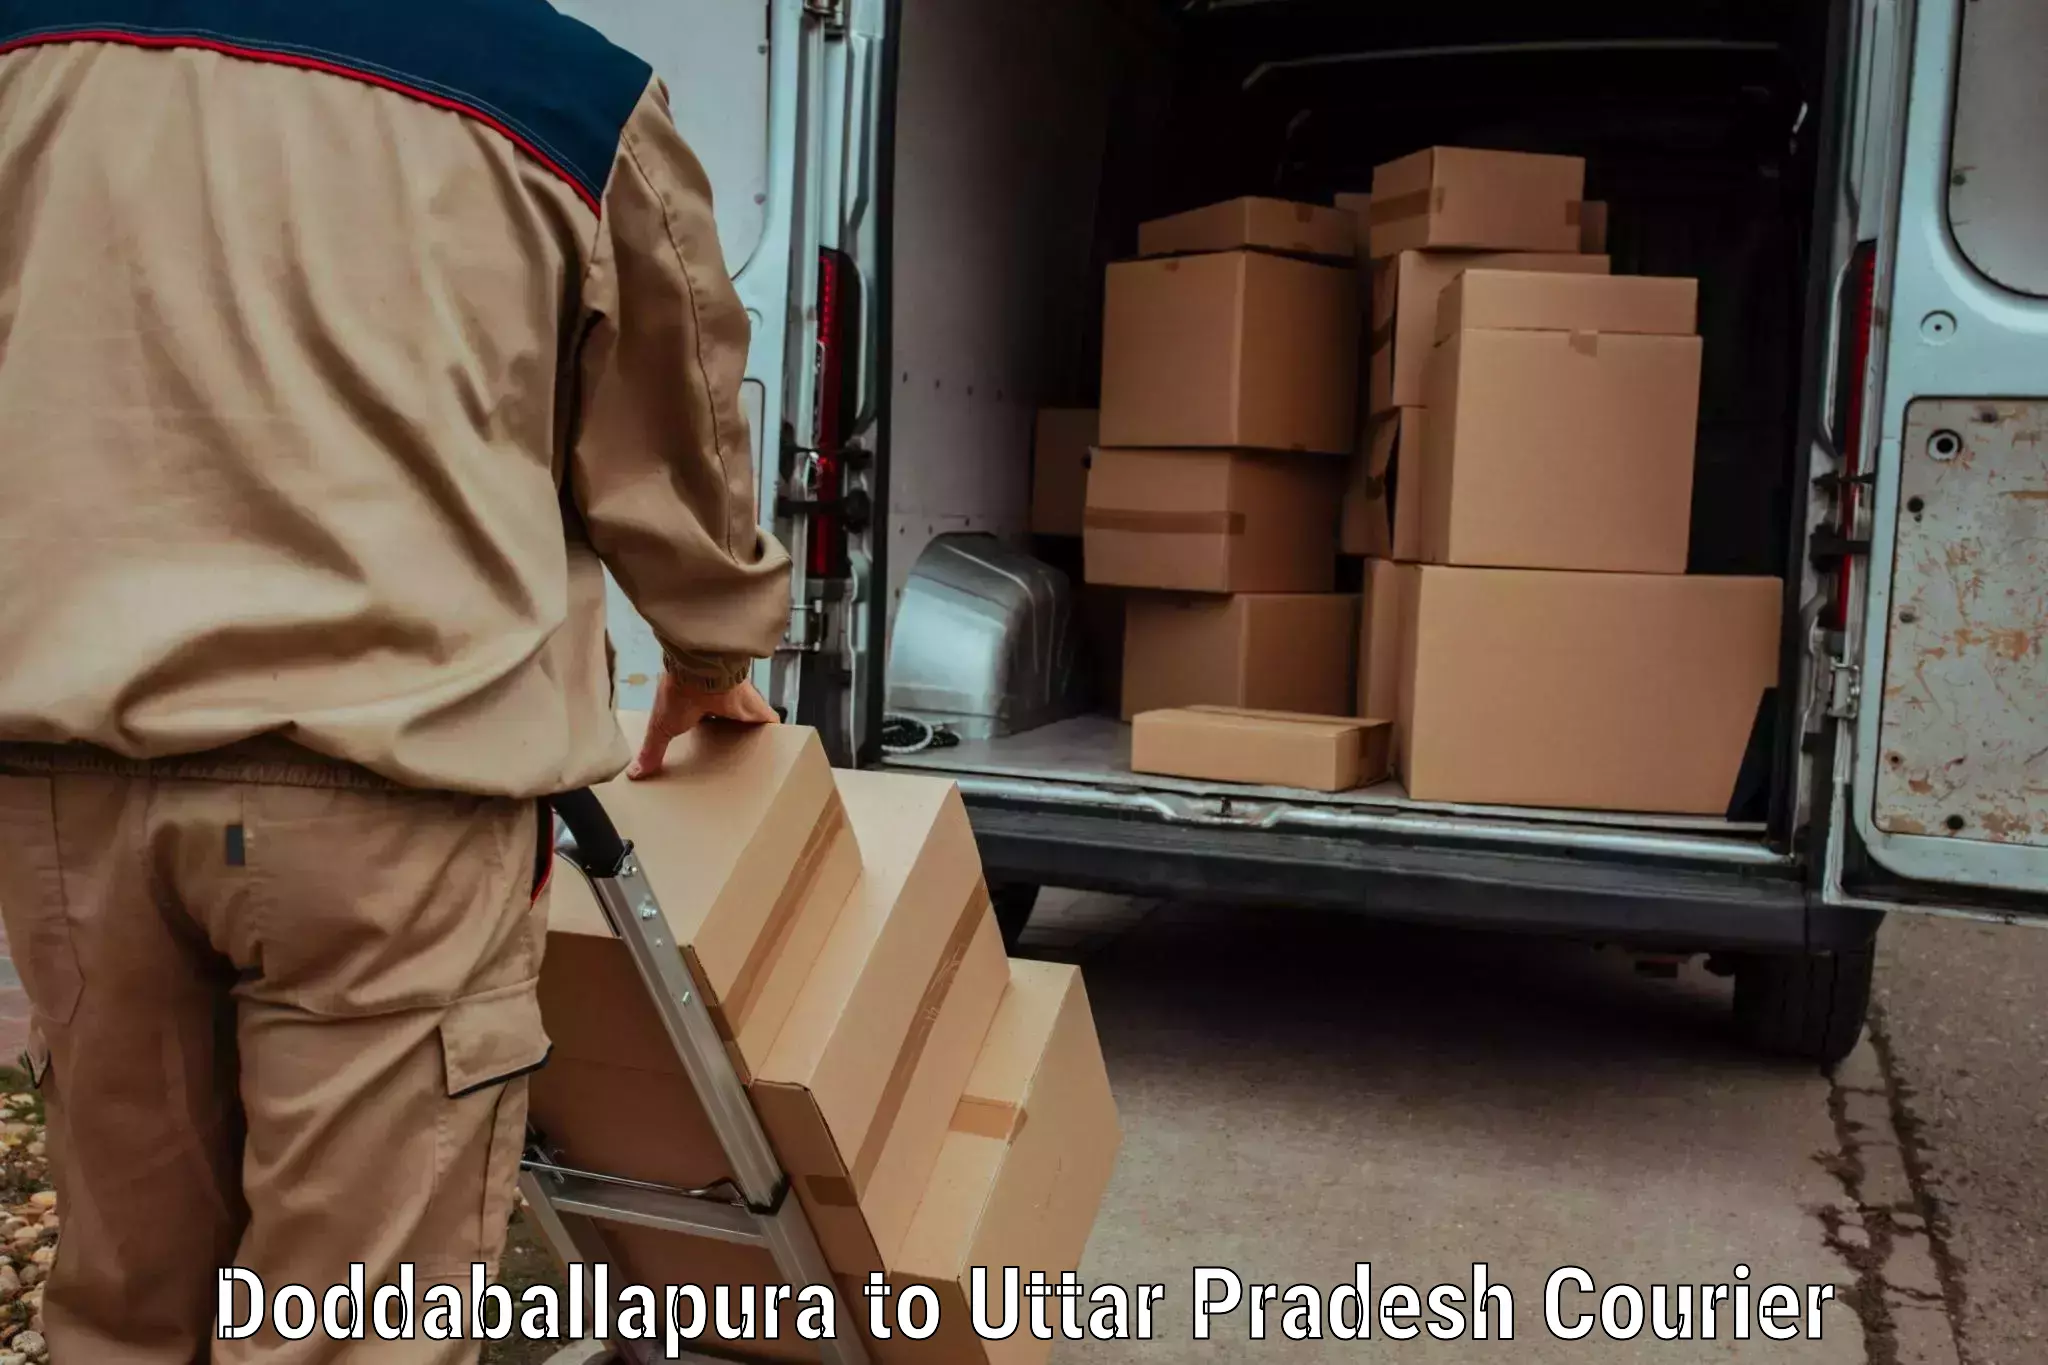 Online package tracking Doddaballapura to Rath